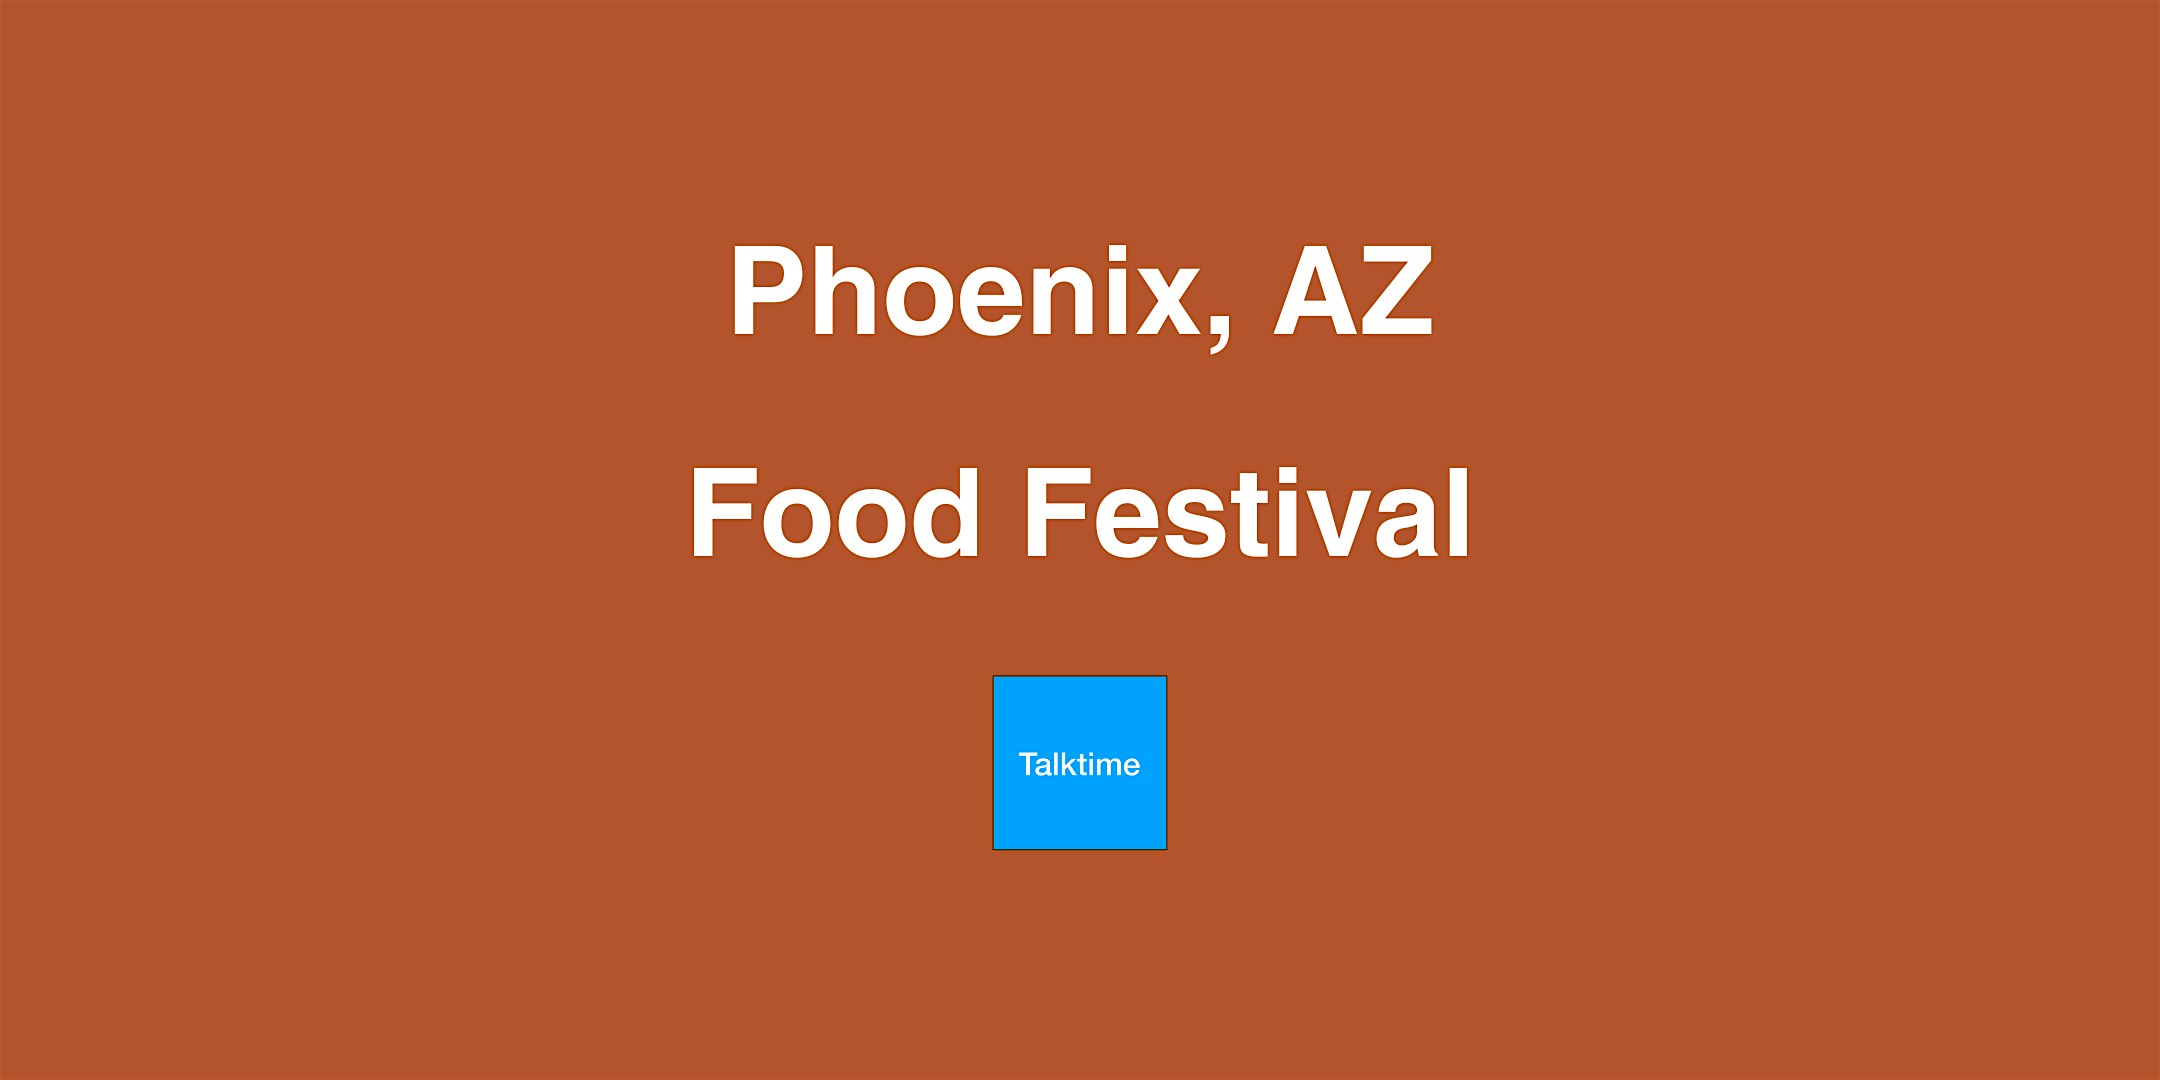 Food Festival - Phoenix